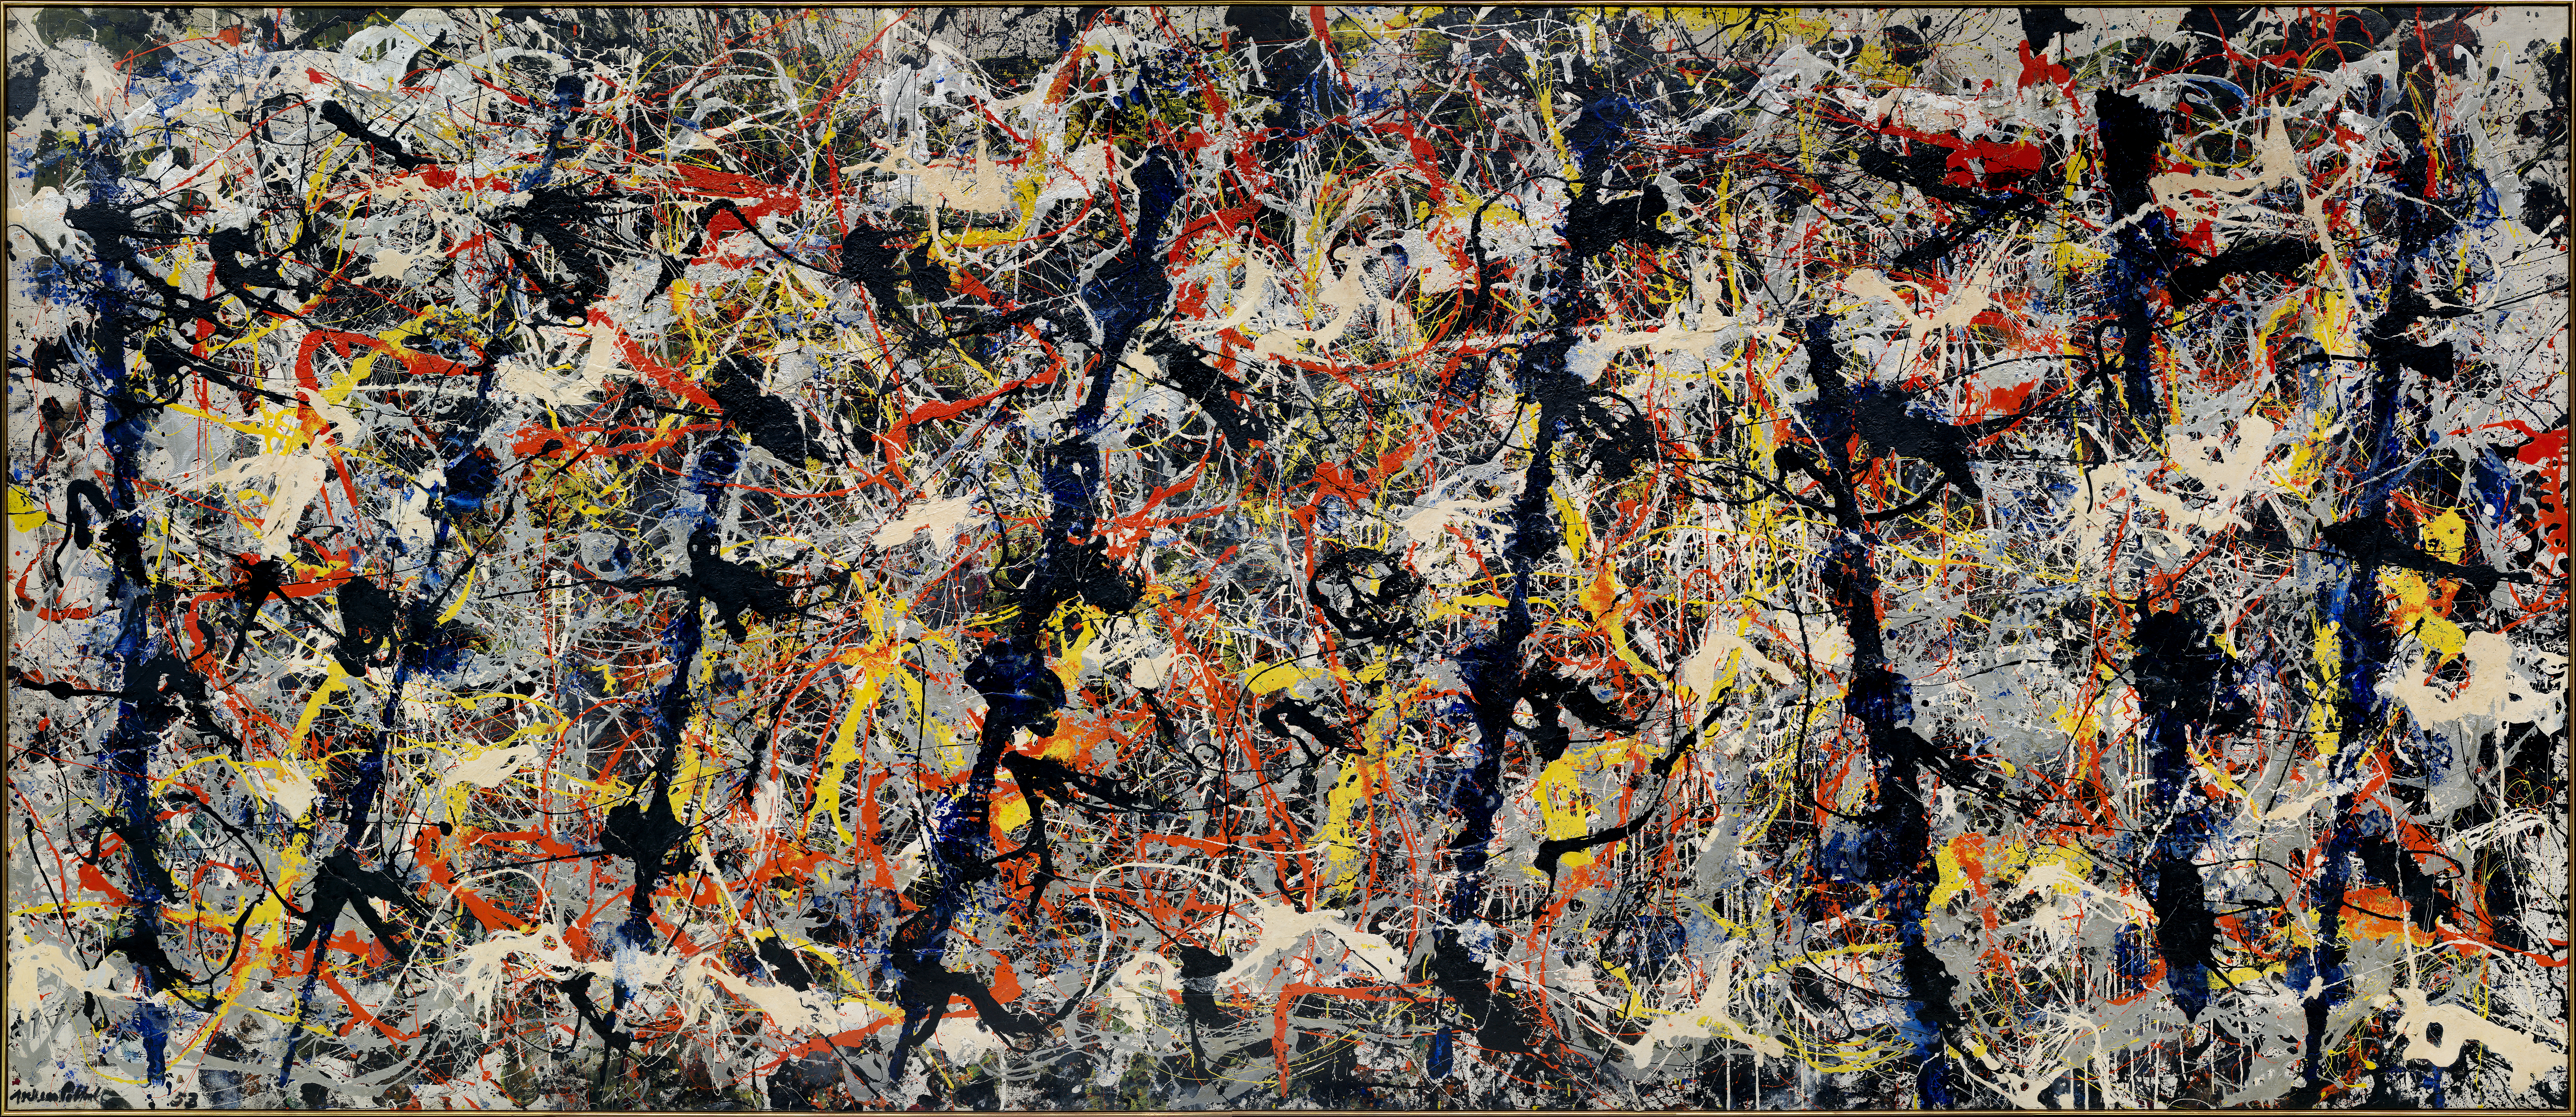 Jackson Pollock's Blue Poles still has the capacity to divide opinion.